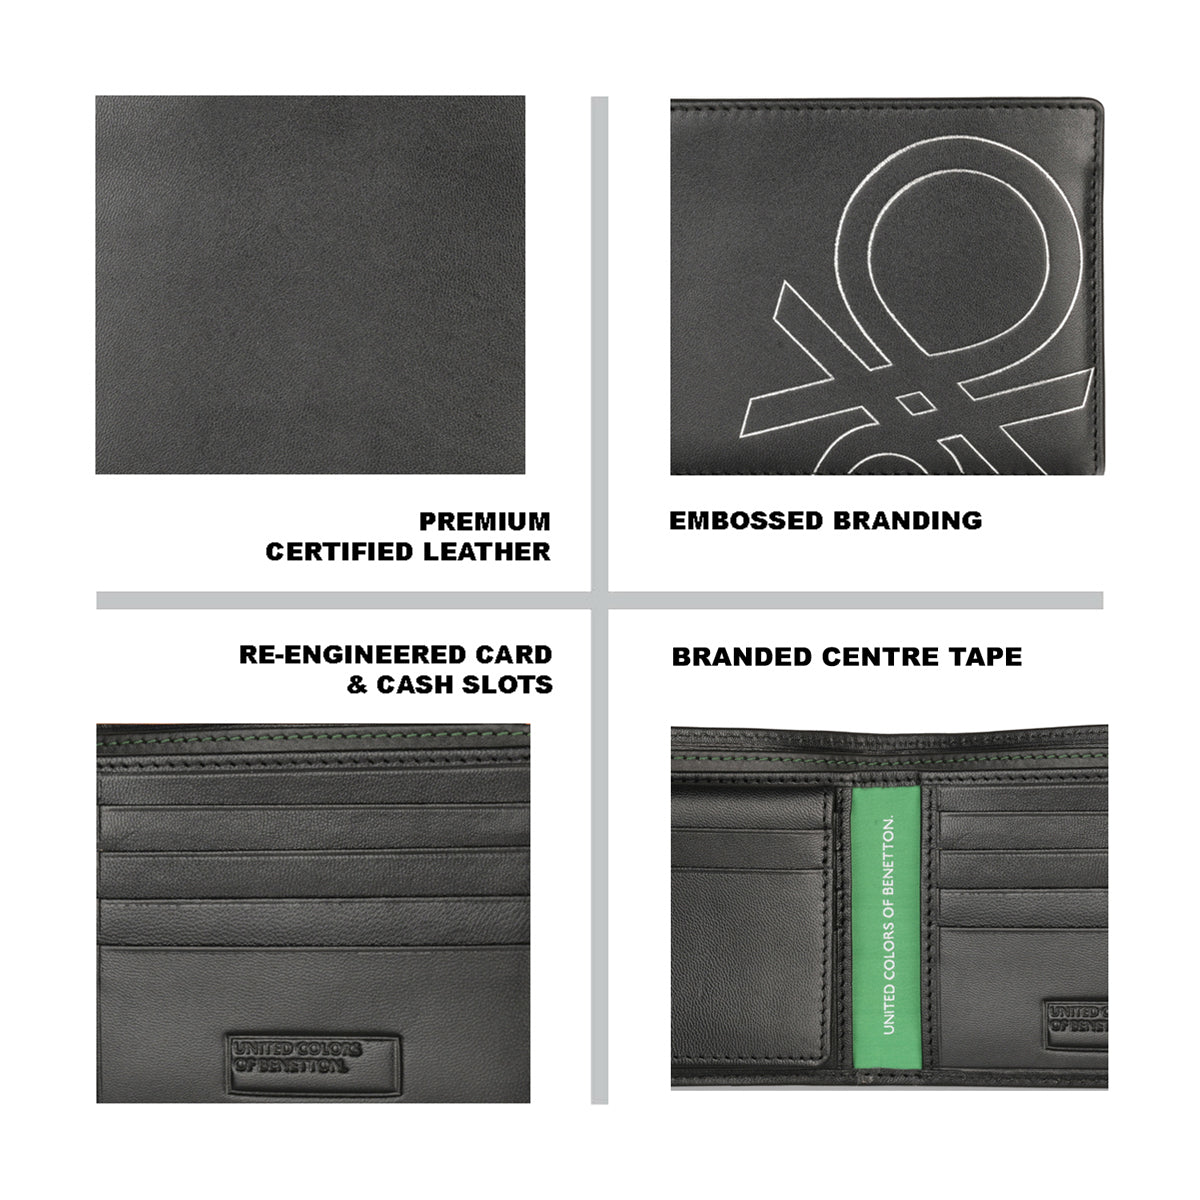 UCB Treviso Men's Leather Passcase Wallet 